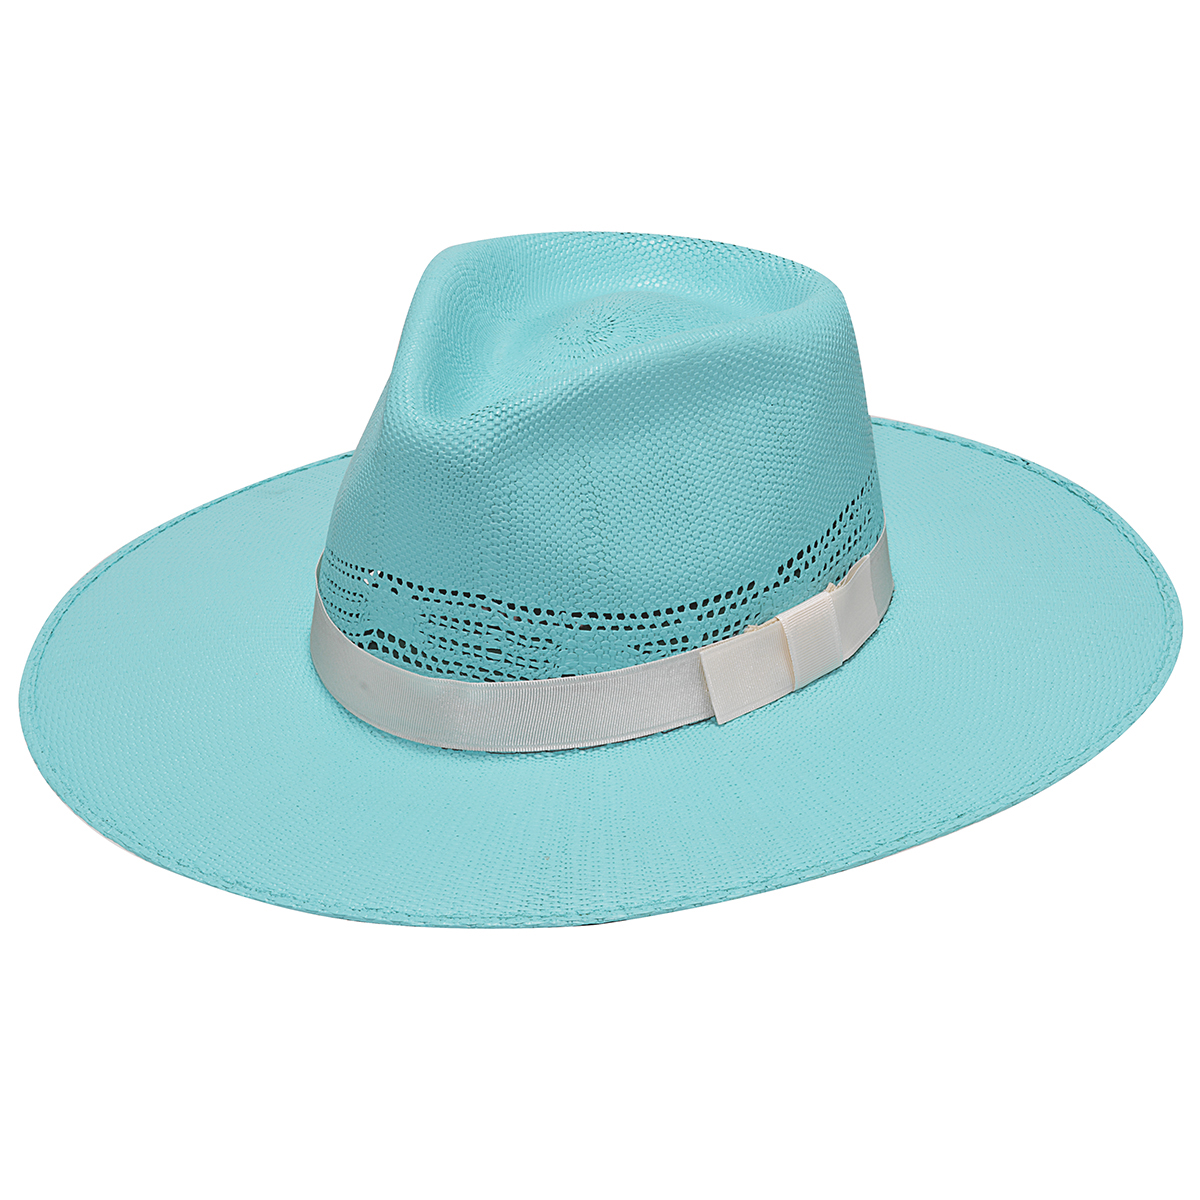 Twister Women's Pinch Front Bangora Straw Western Fashion Hat - Turquoise